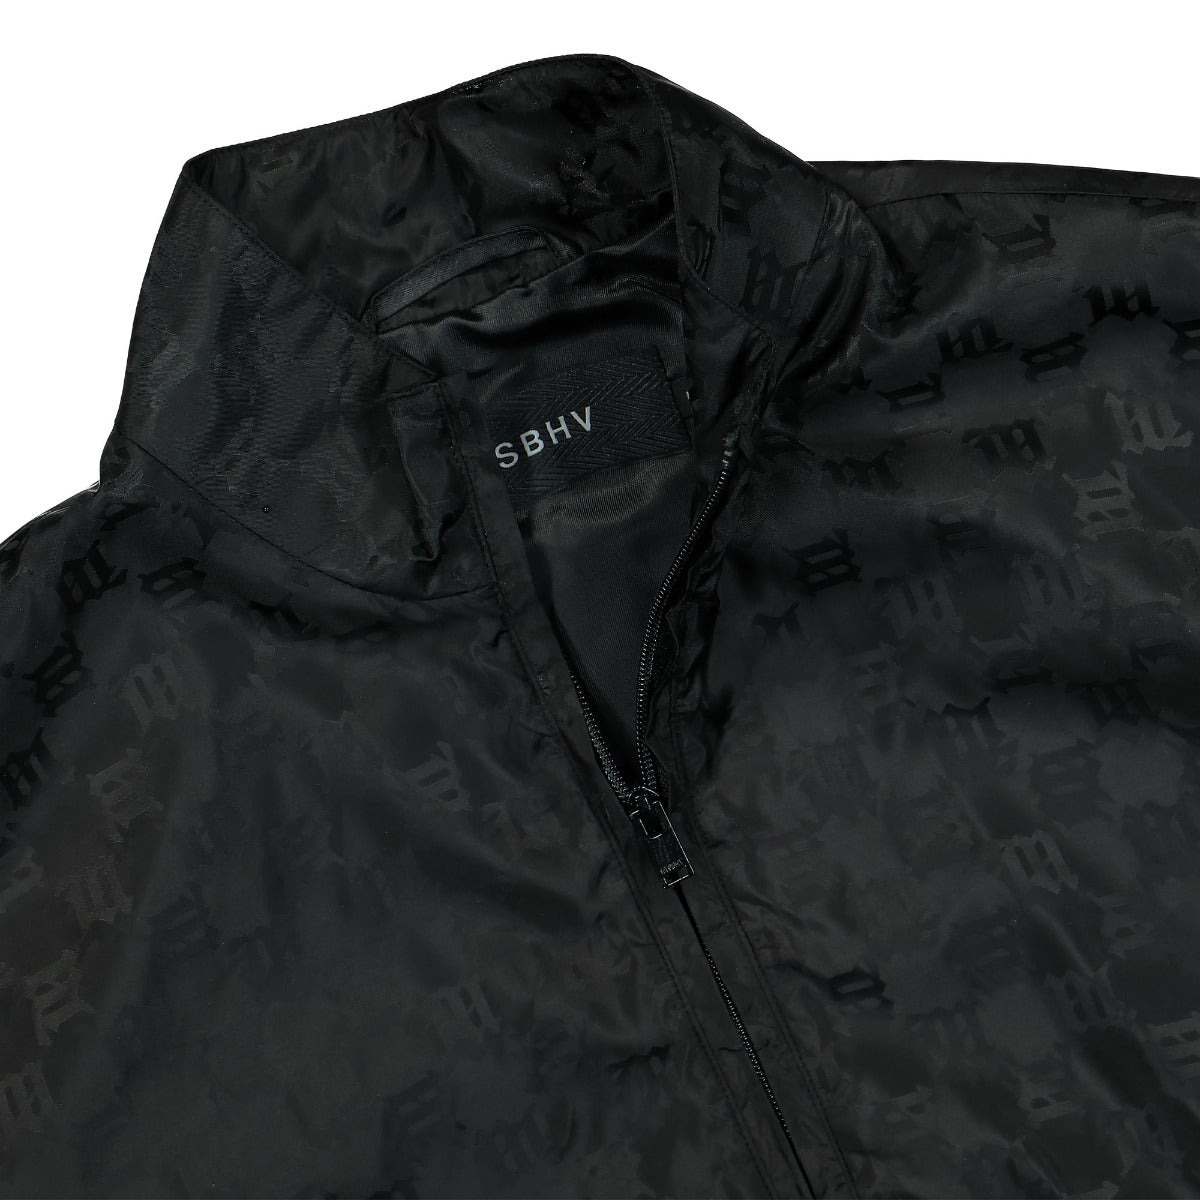 Blvck 'Monogram' Fleece Jacket